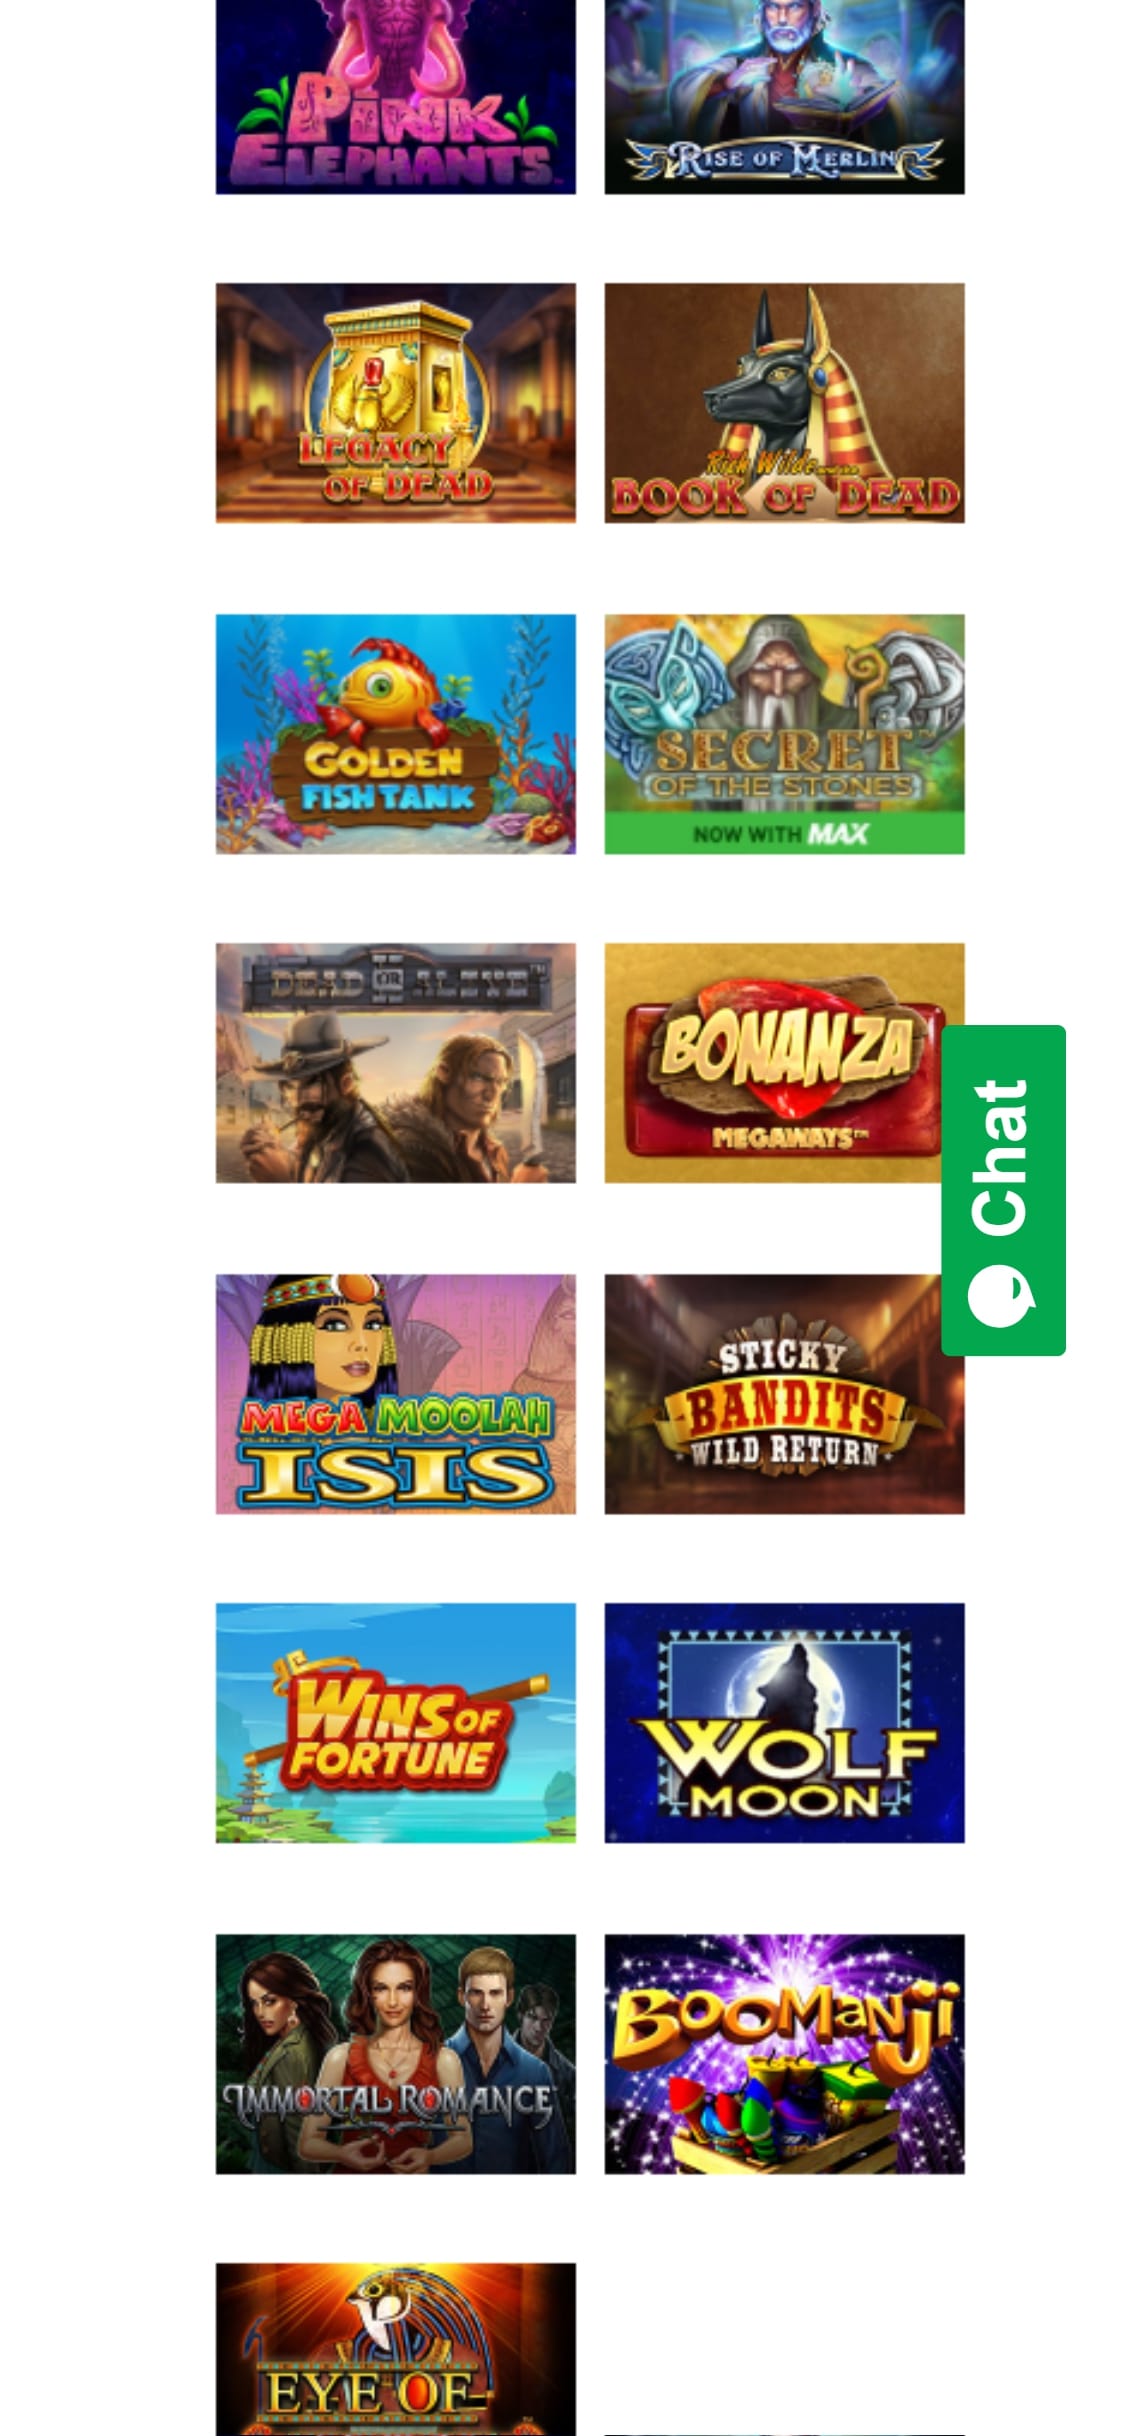 Casino4Dreams Mobile Games Review